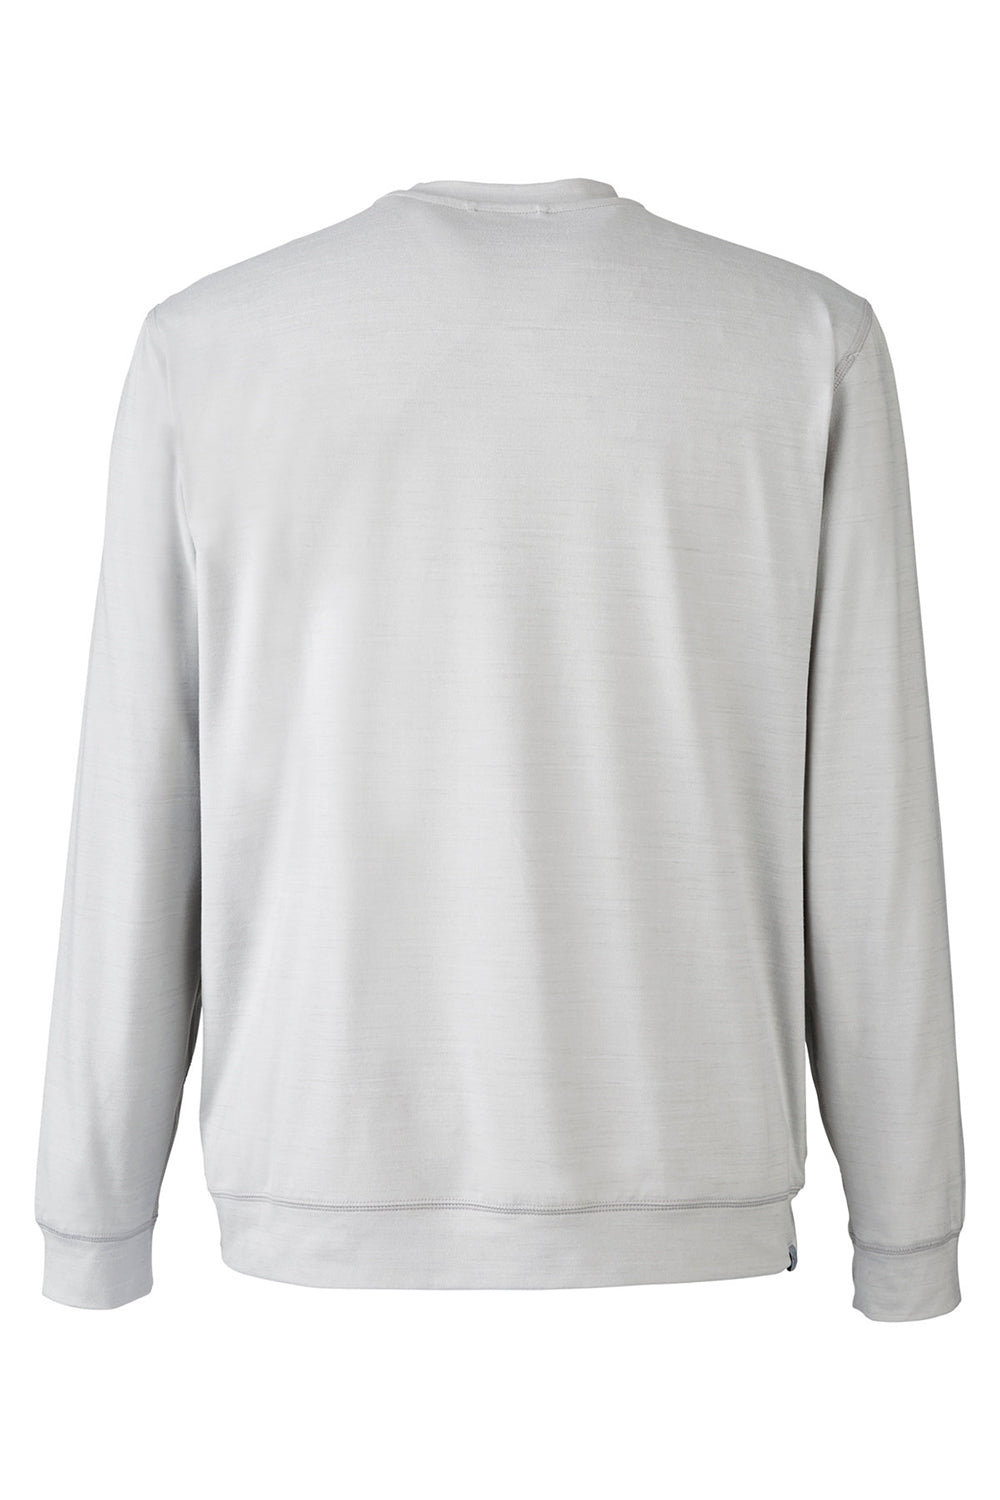 Puma 535500 Mens Cloudspun Crewneck Sweatshirt Heather High Rise Grey Flat Back